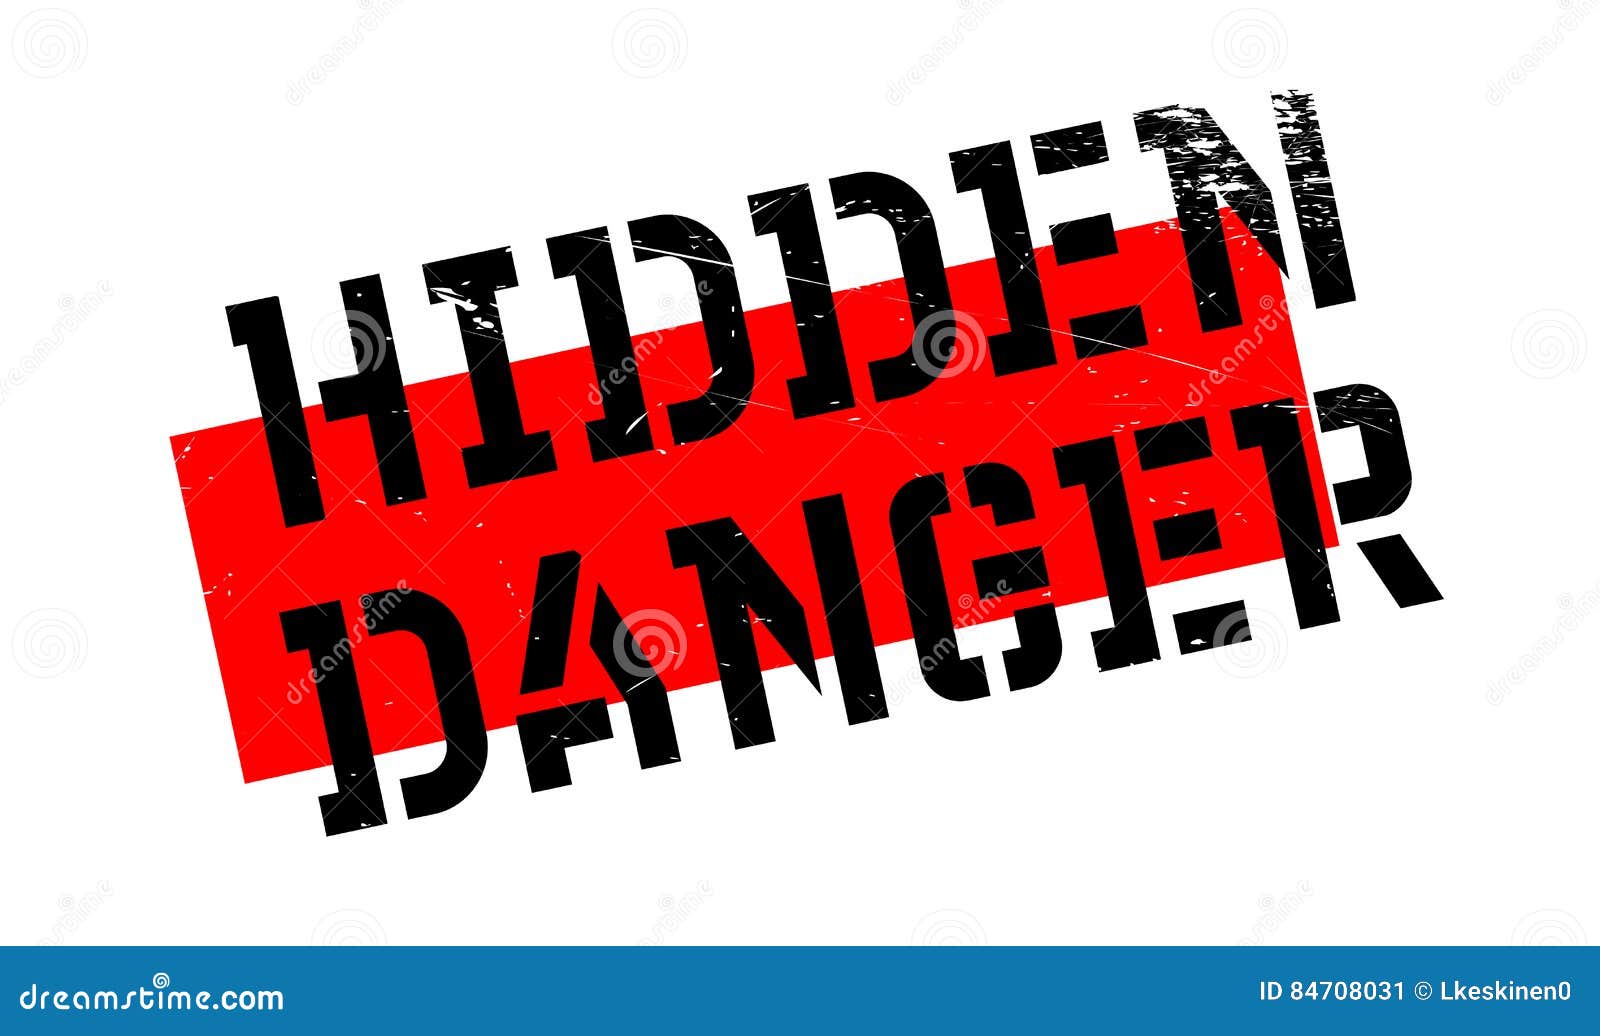 Hidden Danger Rubber Stamp Stock Image | CartoonDealer.com #83214283 Danger Stamp